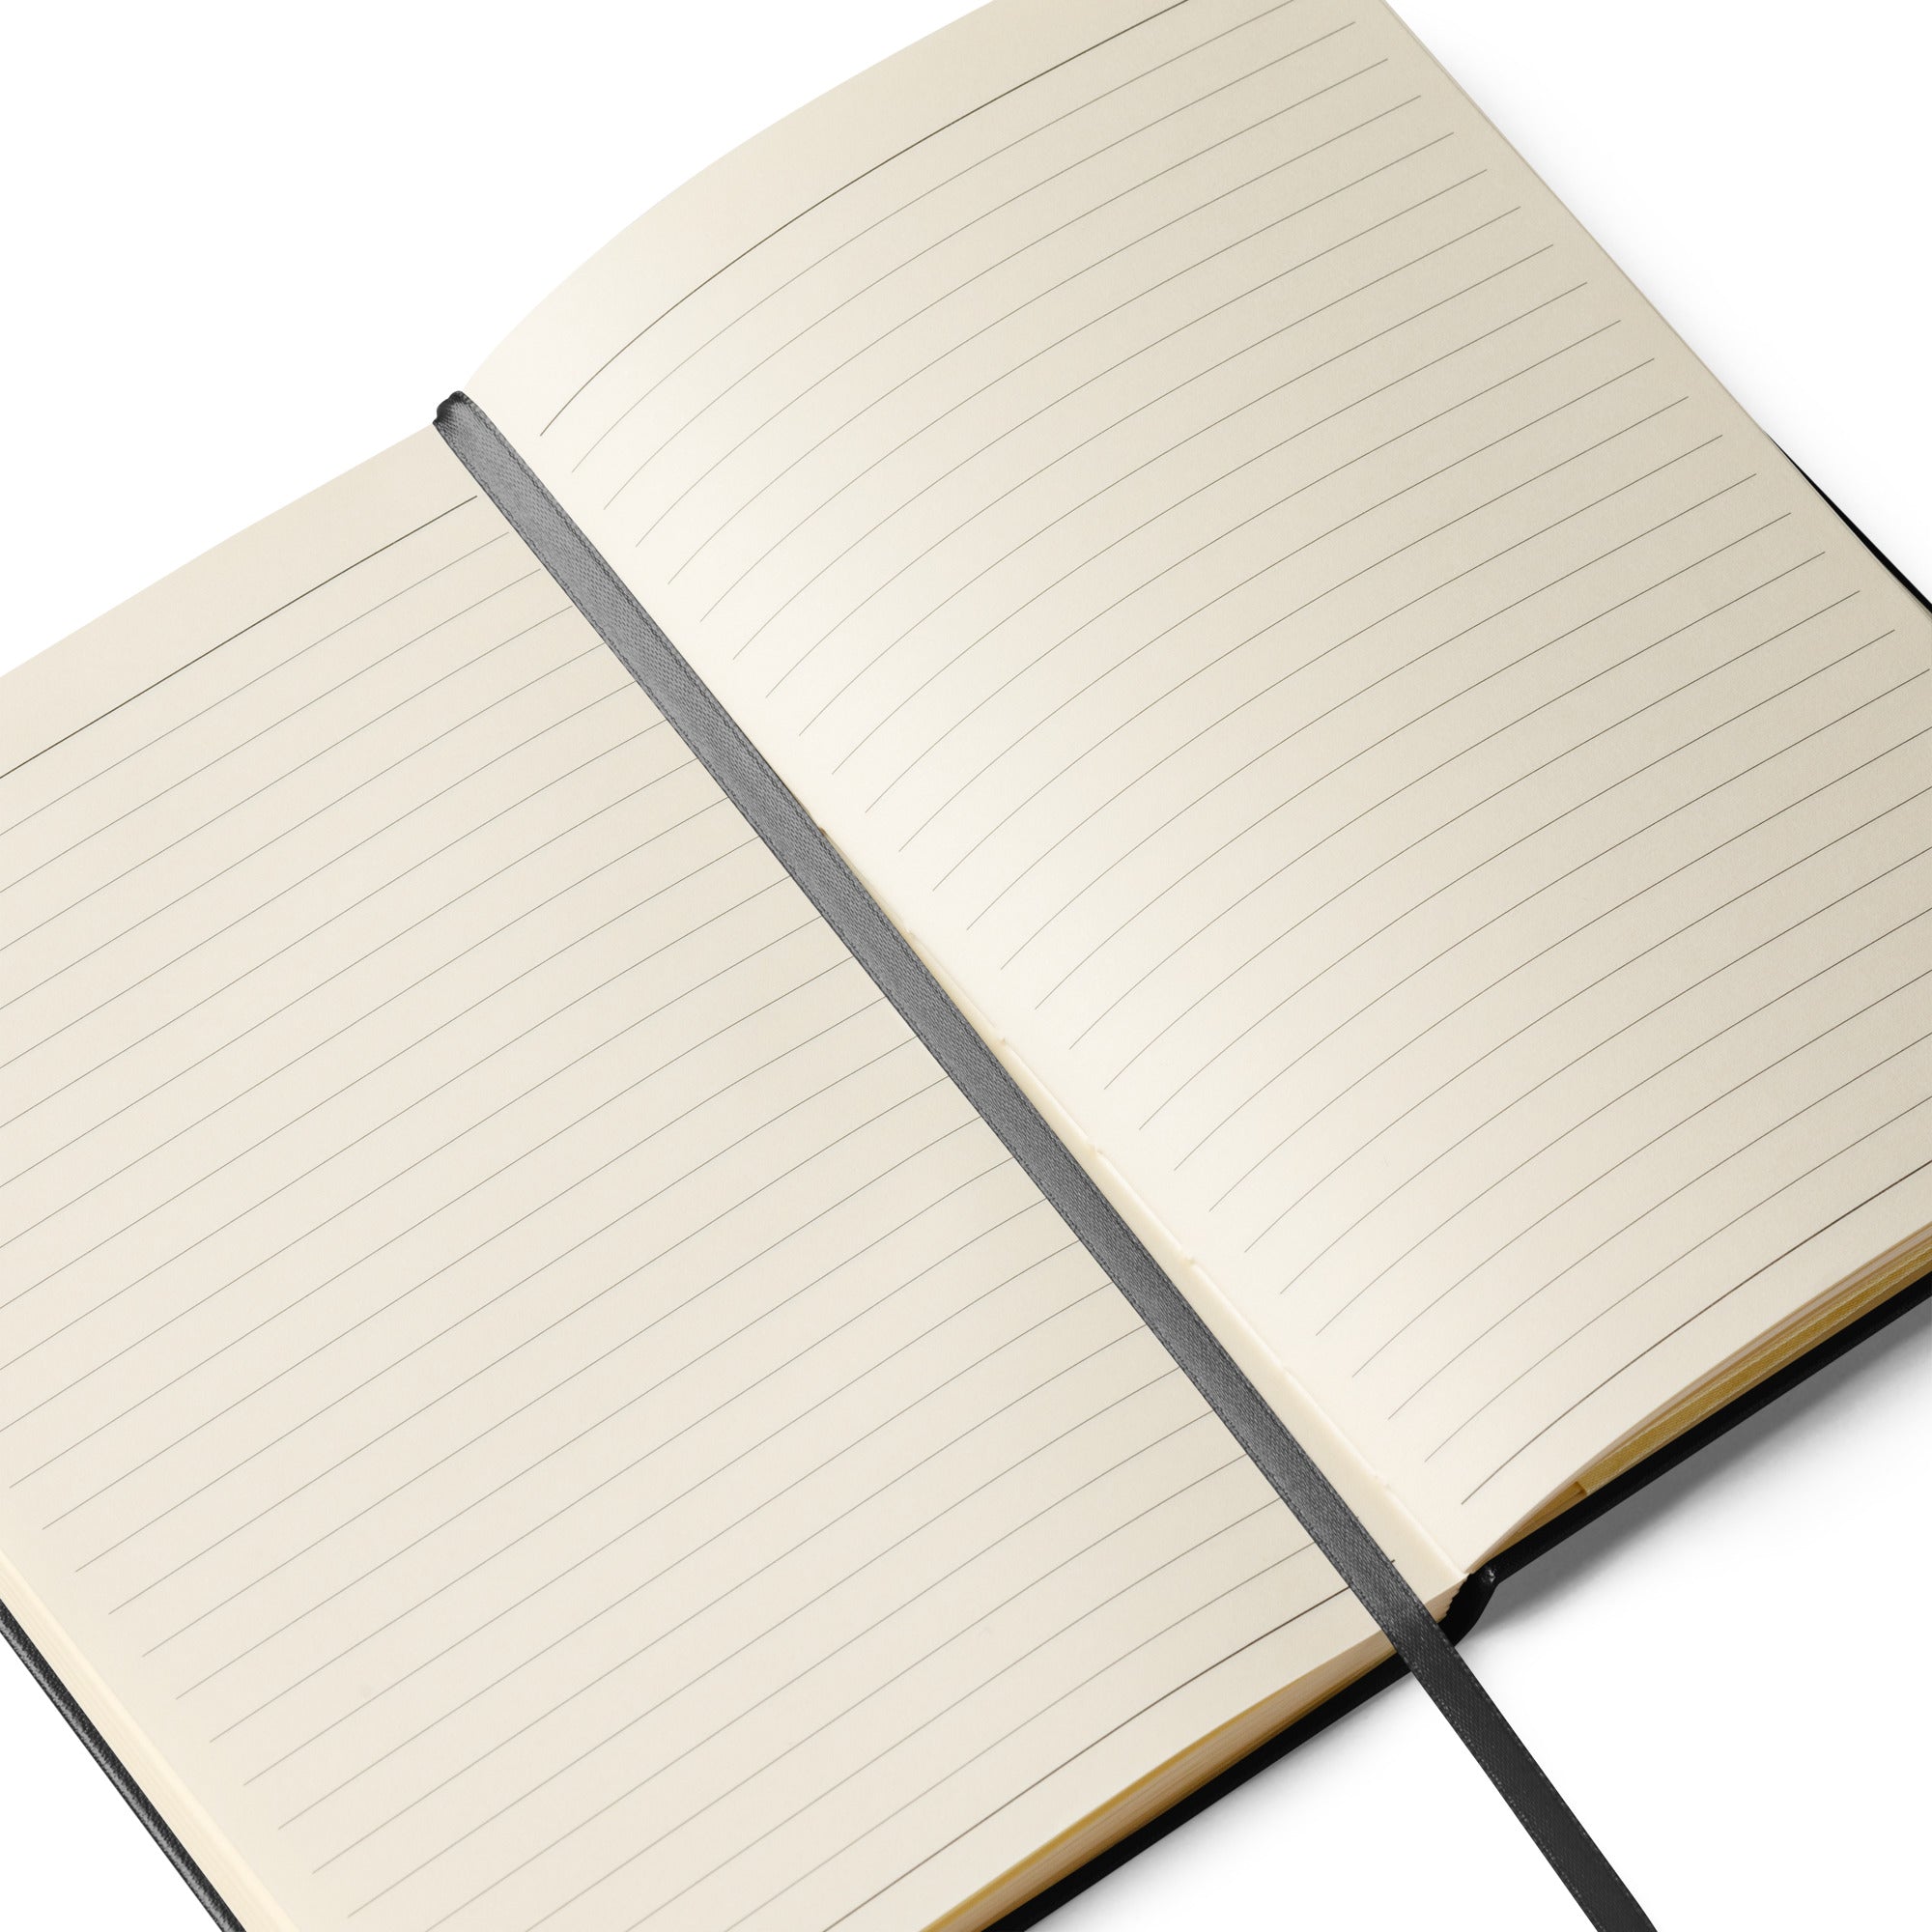 VRAUTO | Hardcover bound notebook